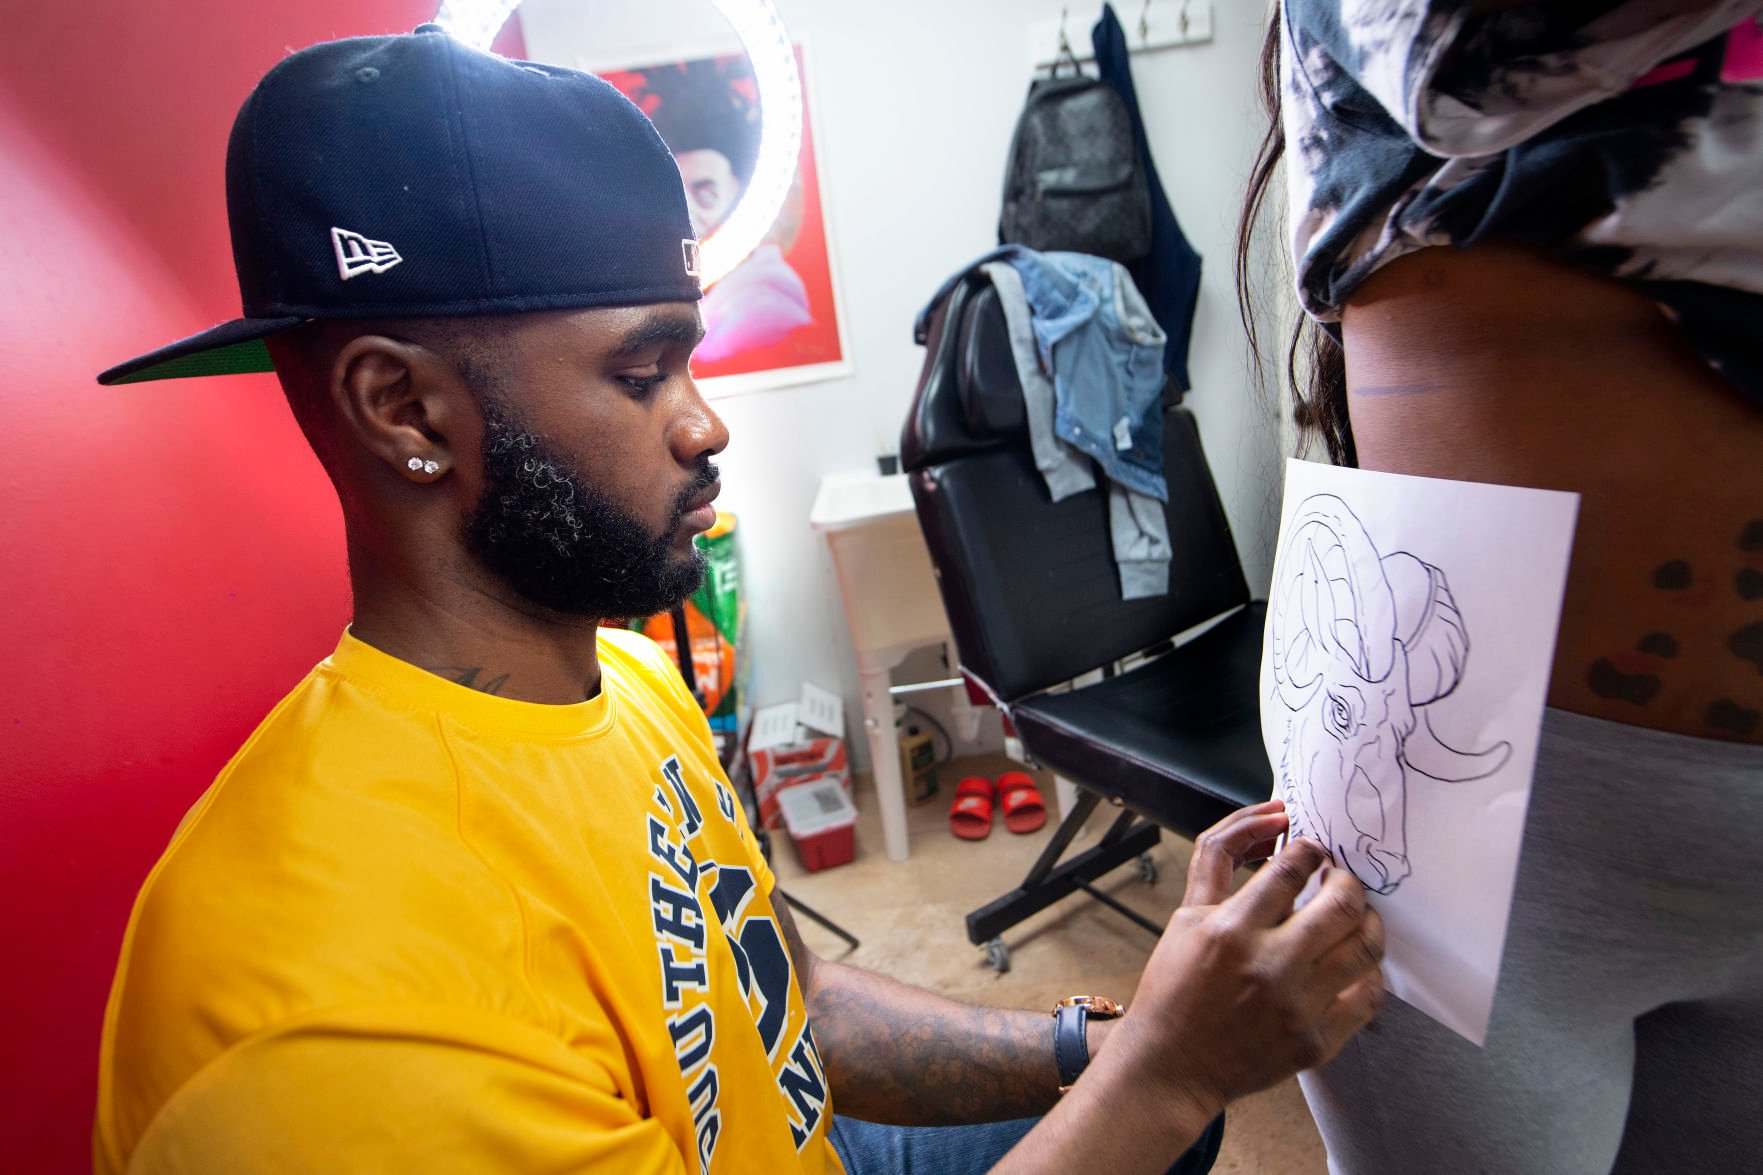 DAVE WAH - Tattoo Artist - Baltimore Maryland